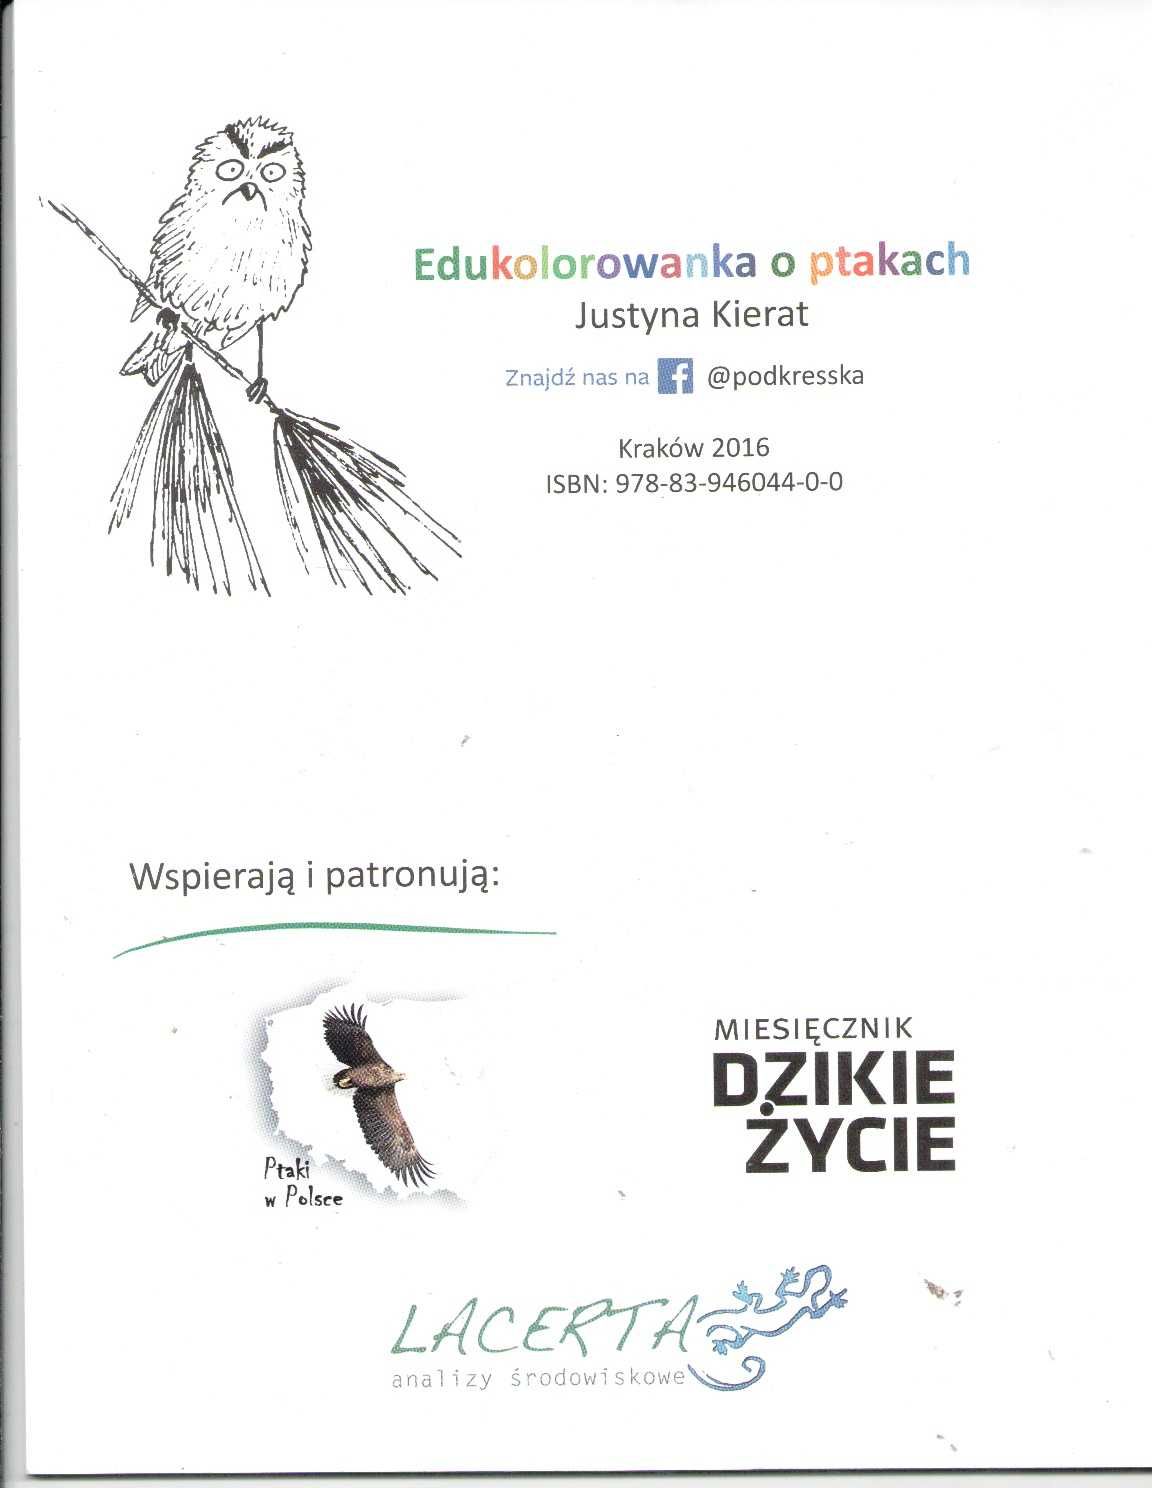 Edukolorowanka o ptakach Justyna Kierat